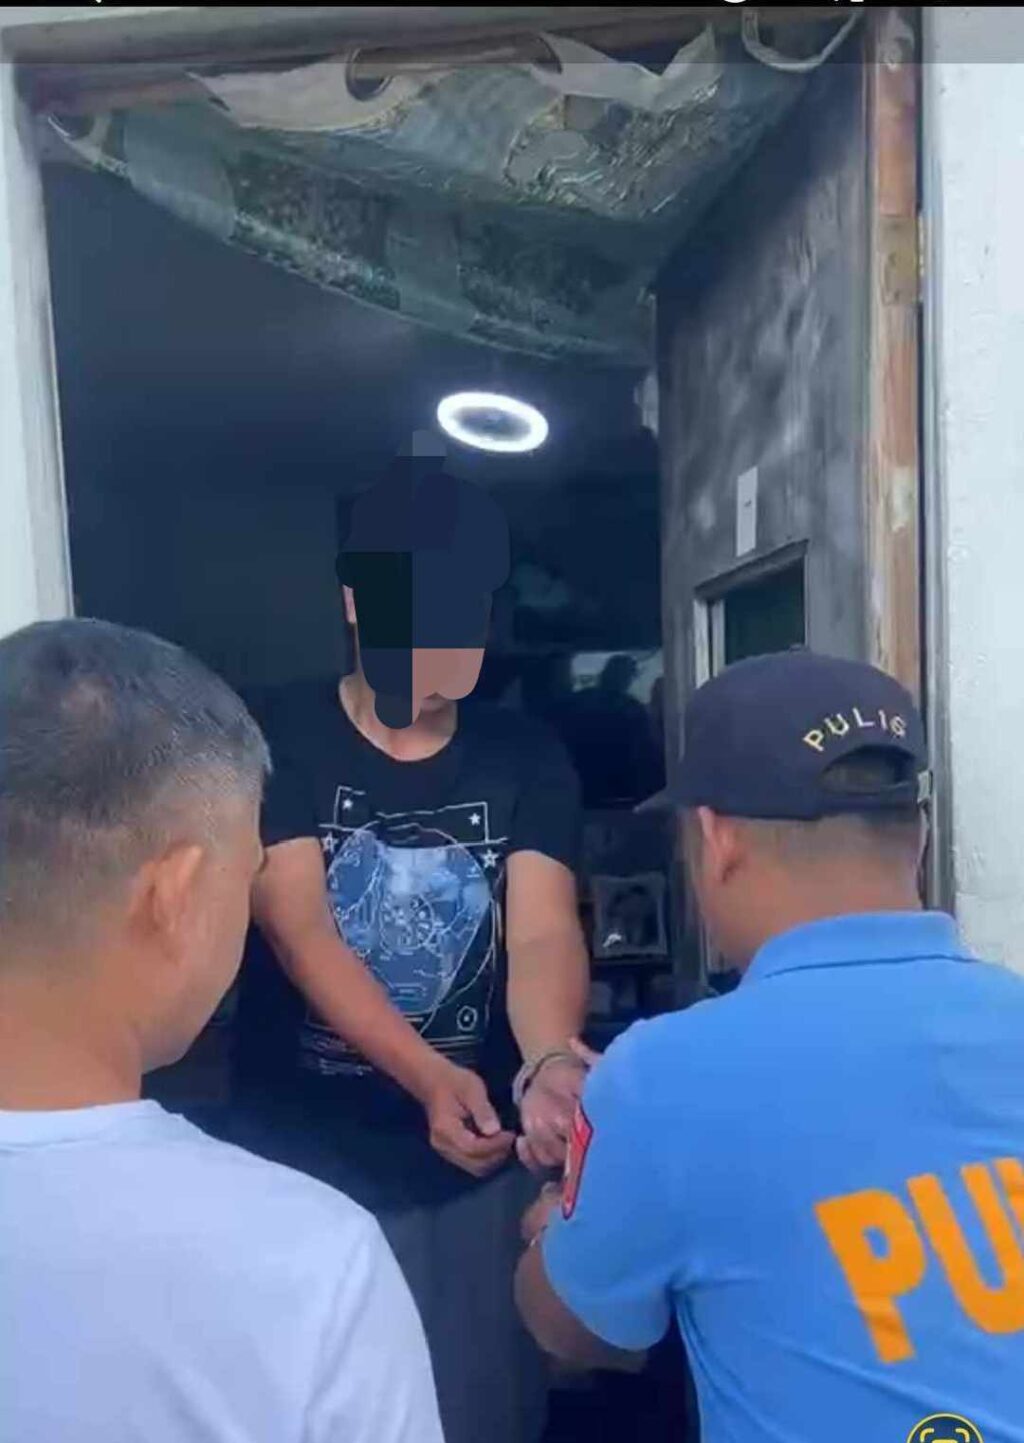 Man from Cebu City jailed for losing payroll money in casino